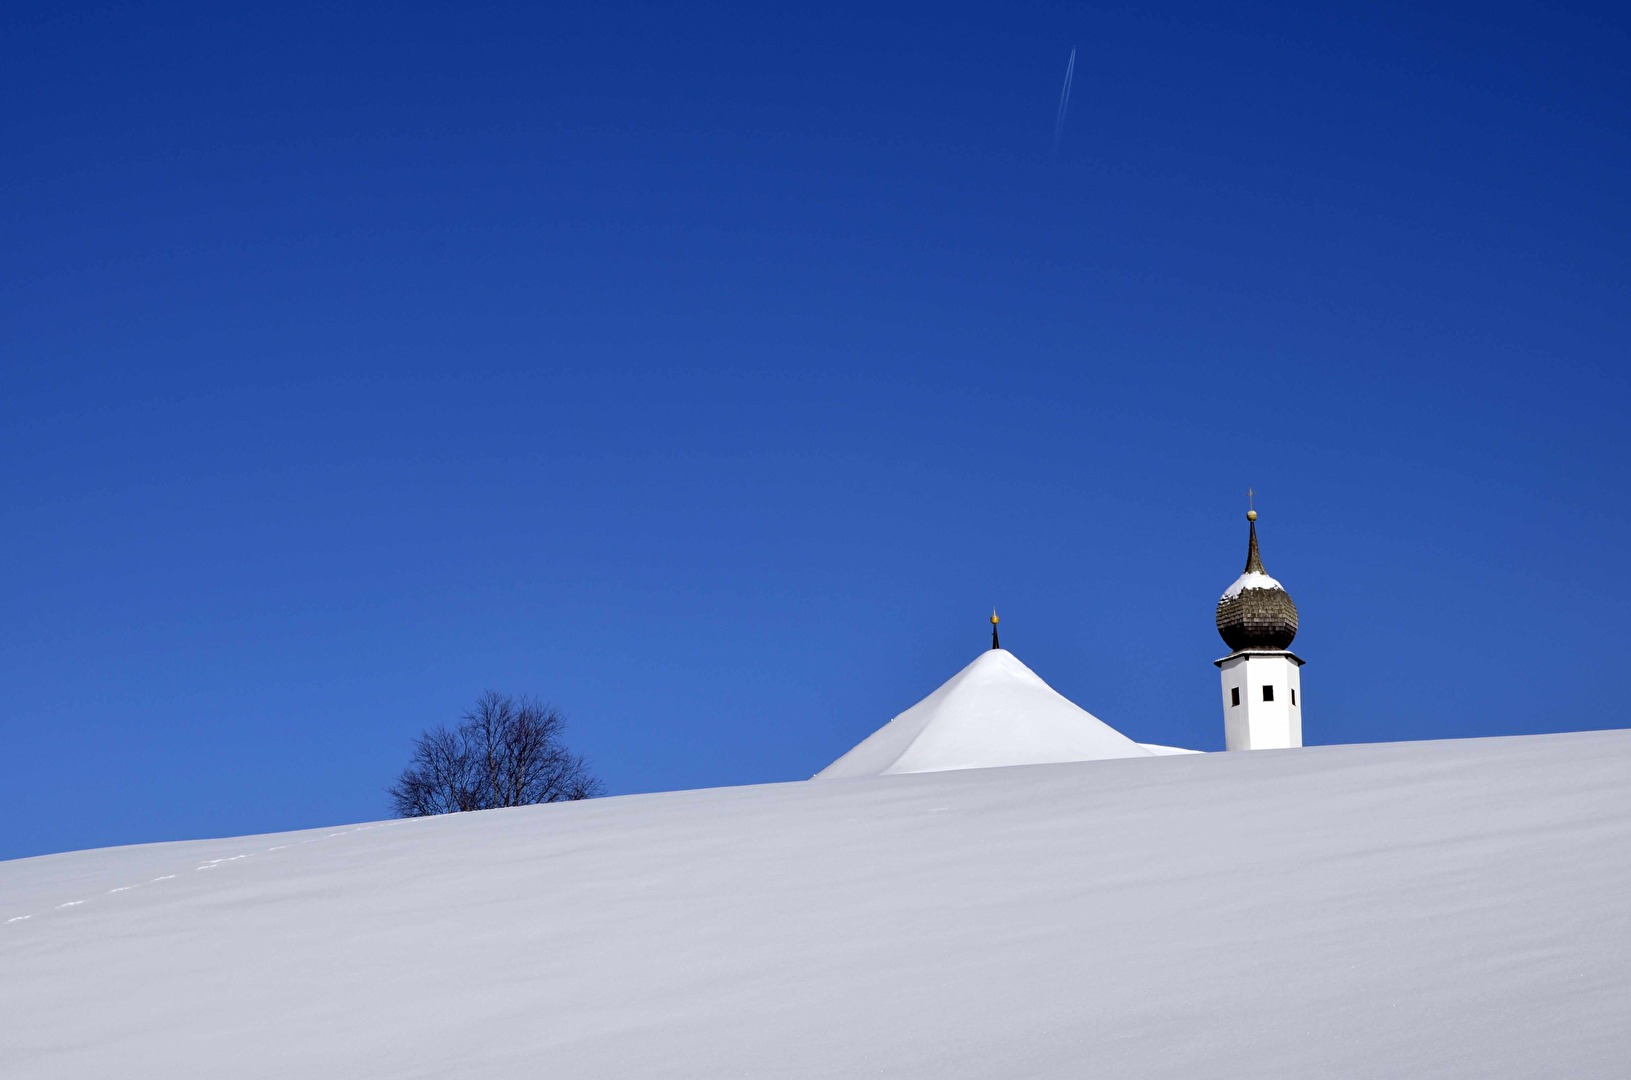 Winter in Tirol...